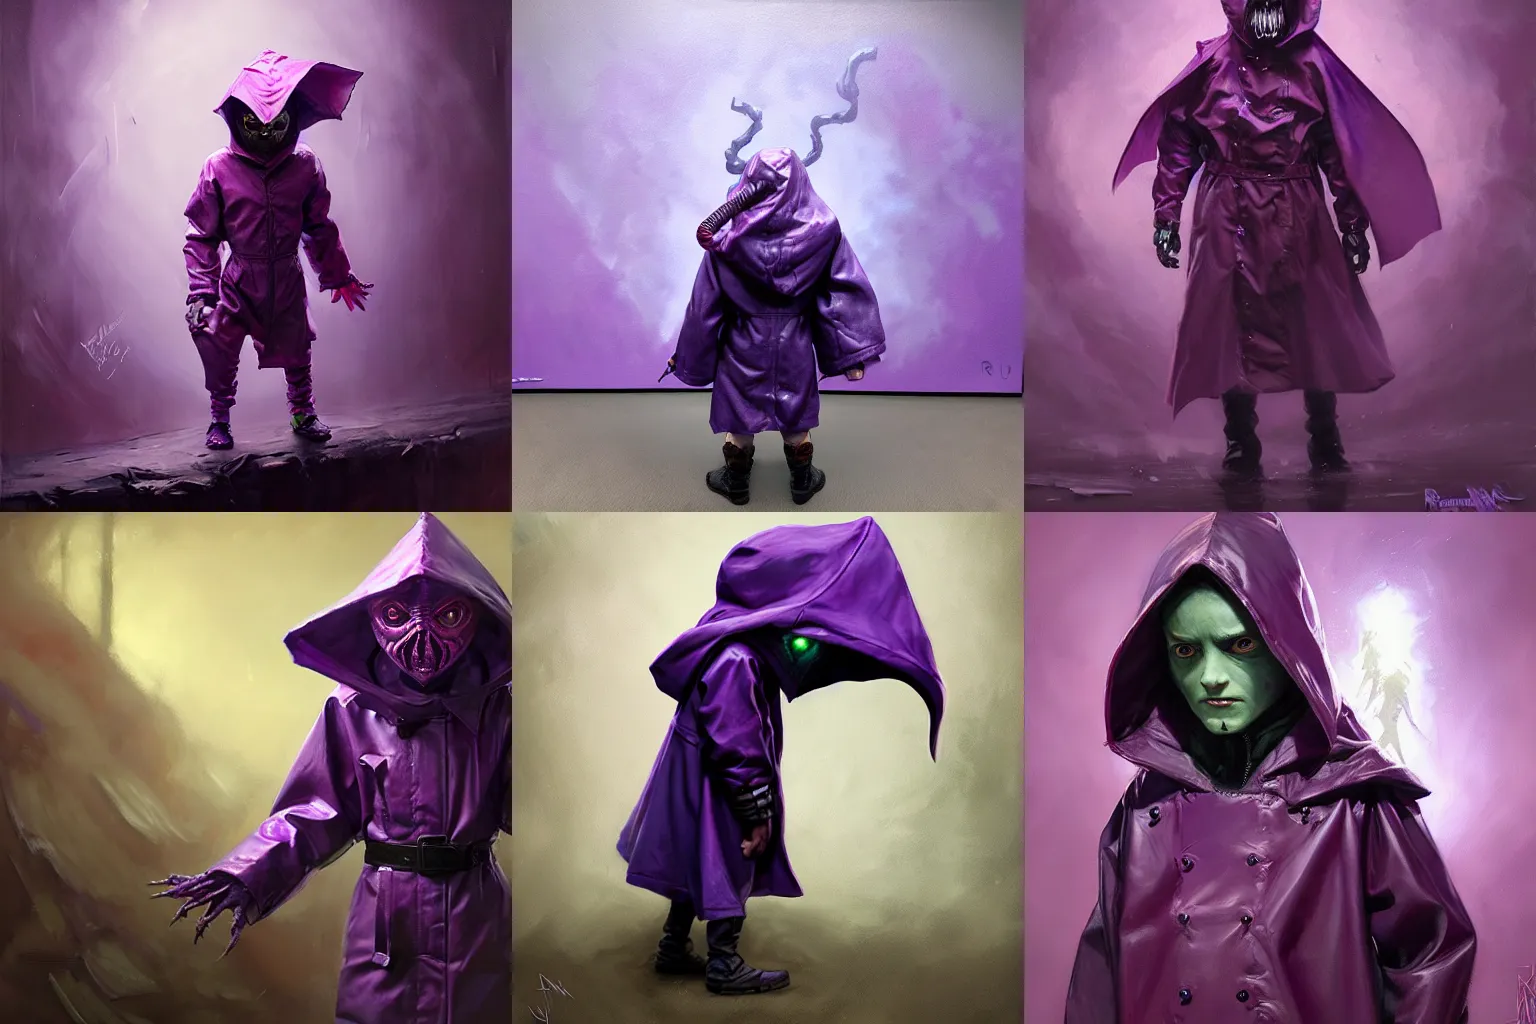 Prompt: Little nightmares purple raincoat demogorgon painted by raymond swanland